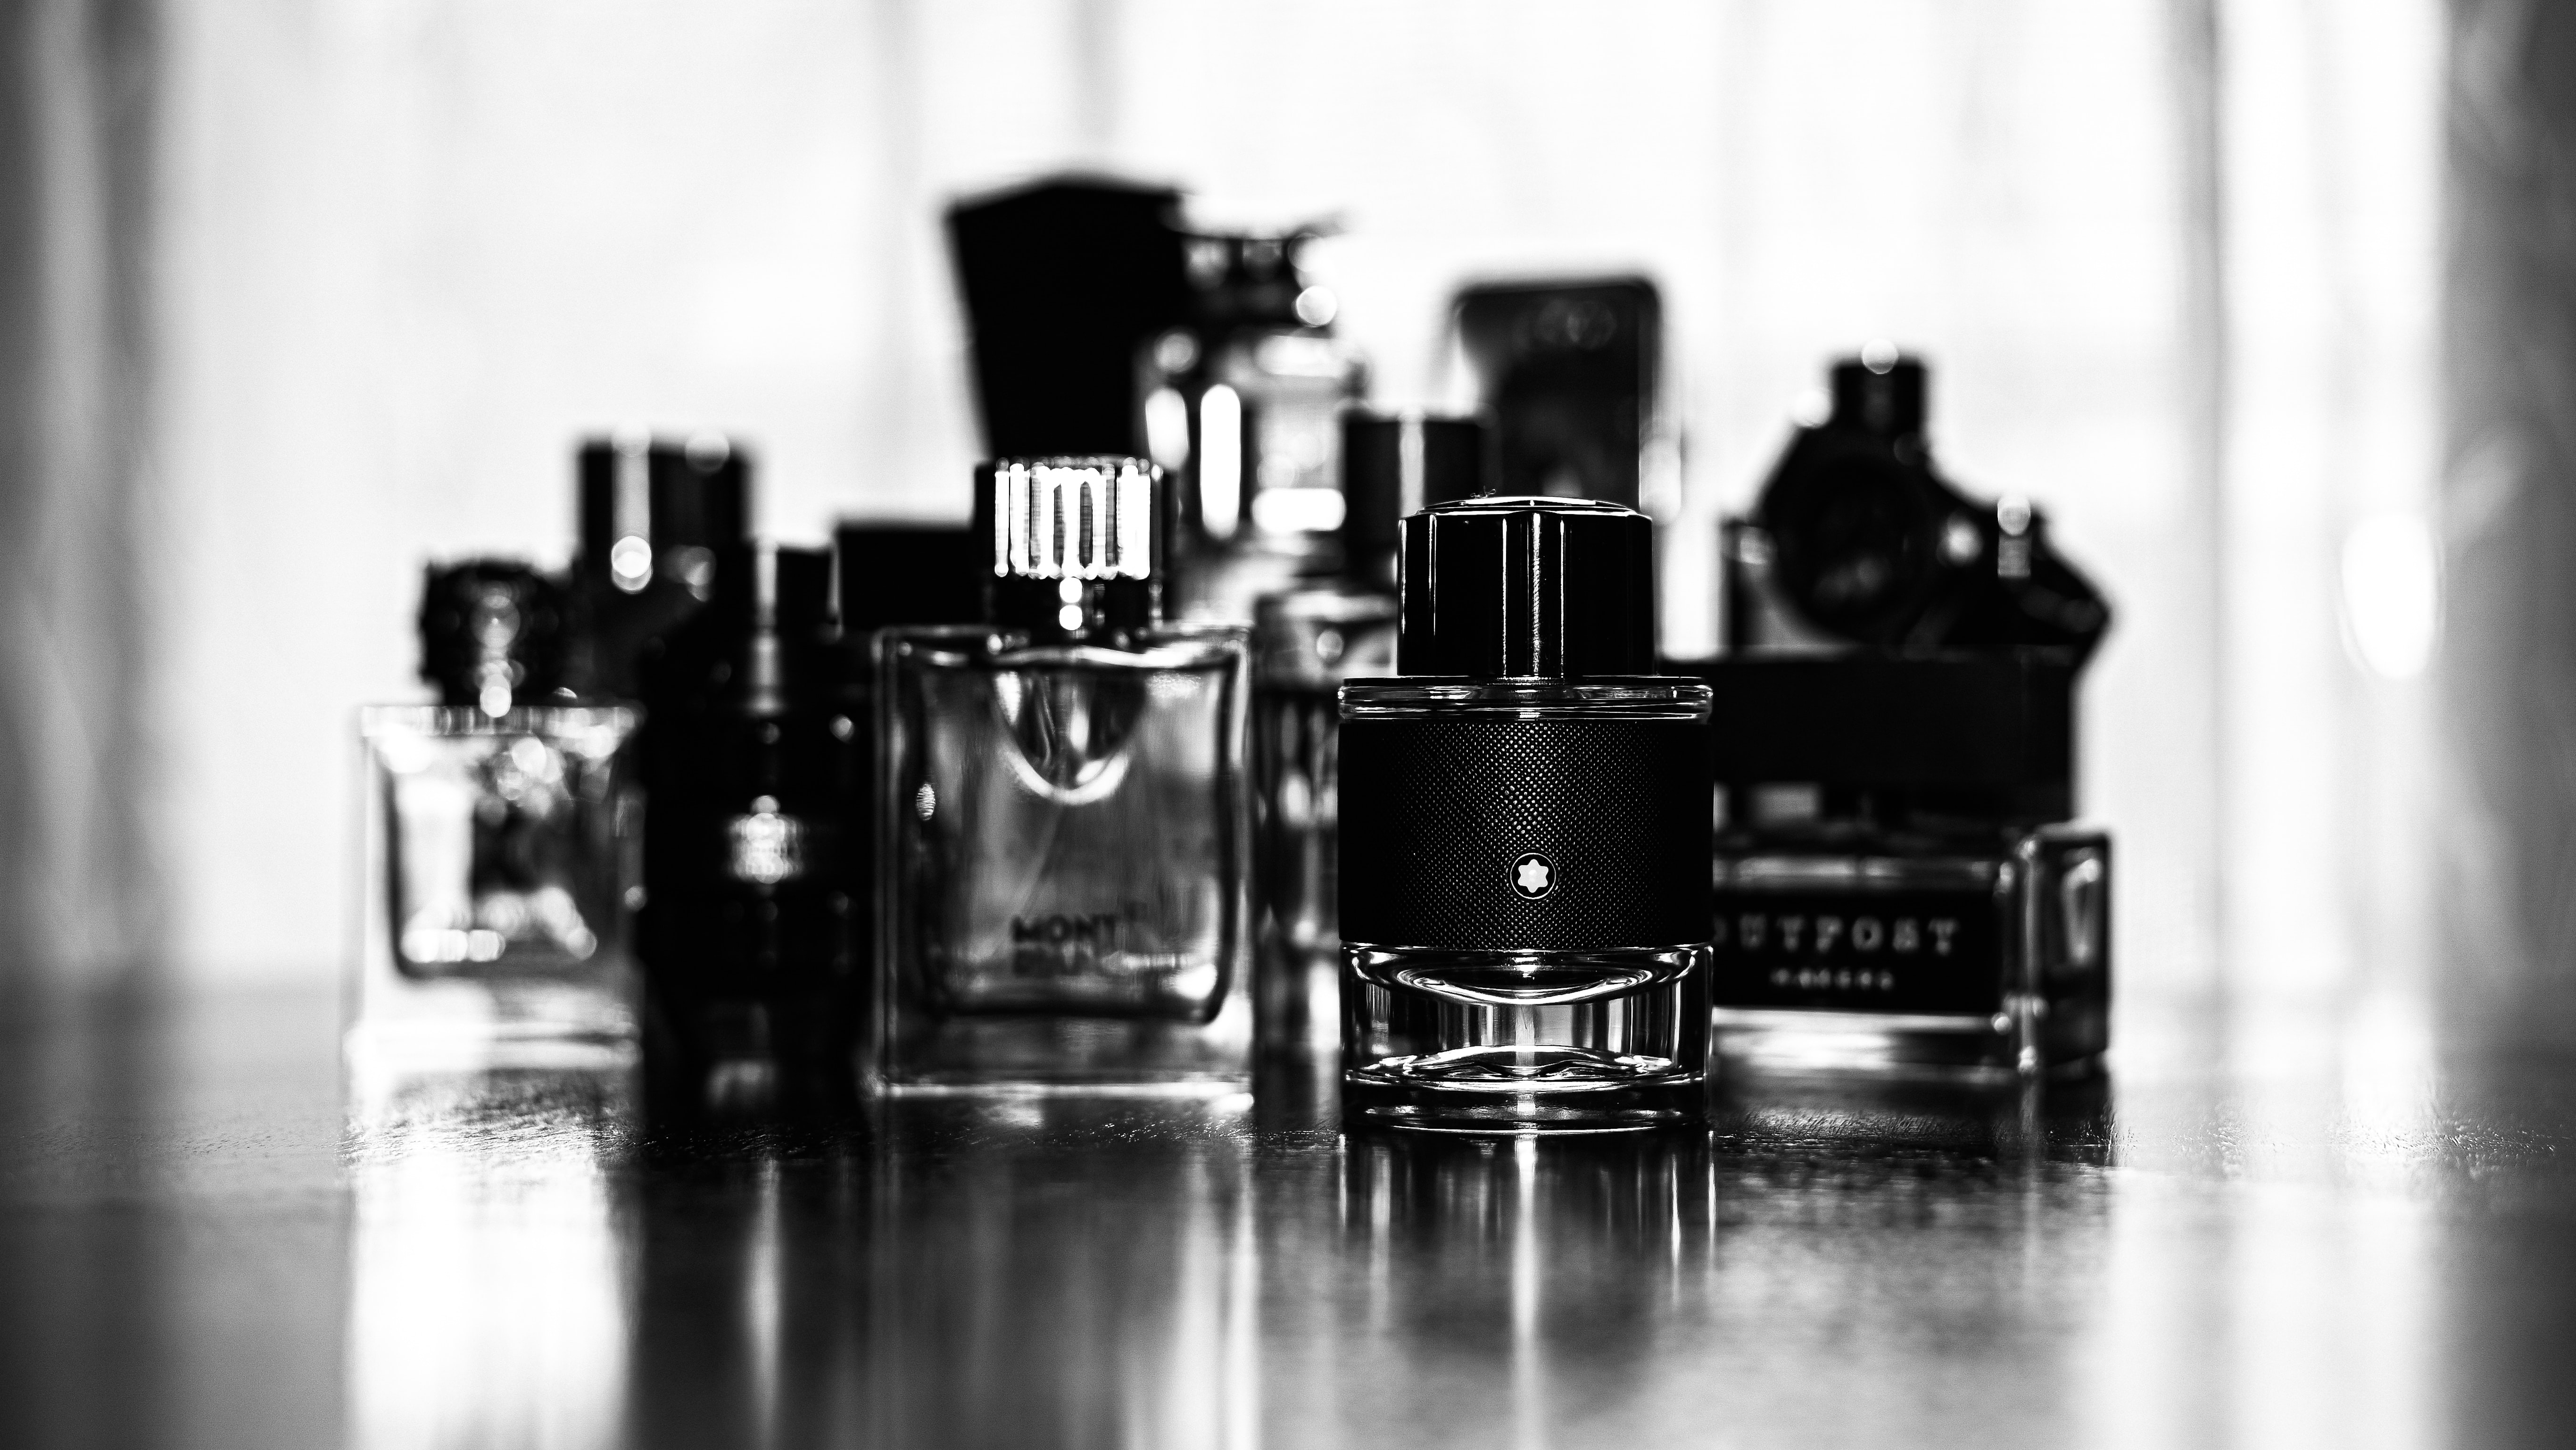 Tom Ford's Estée Lauder acquisition demonstrates the boom of fragrance